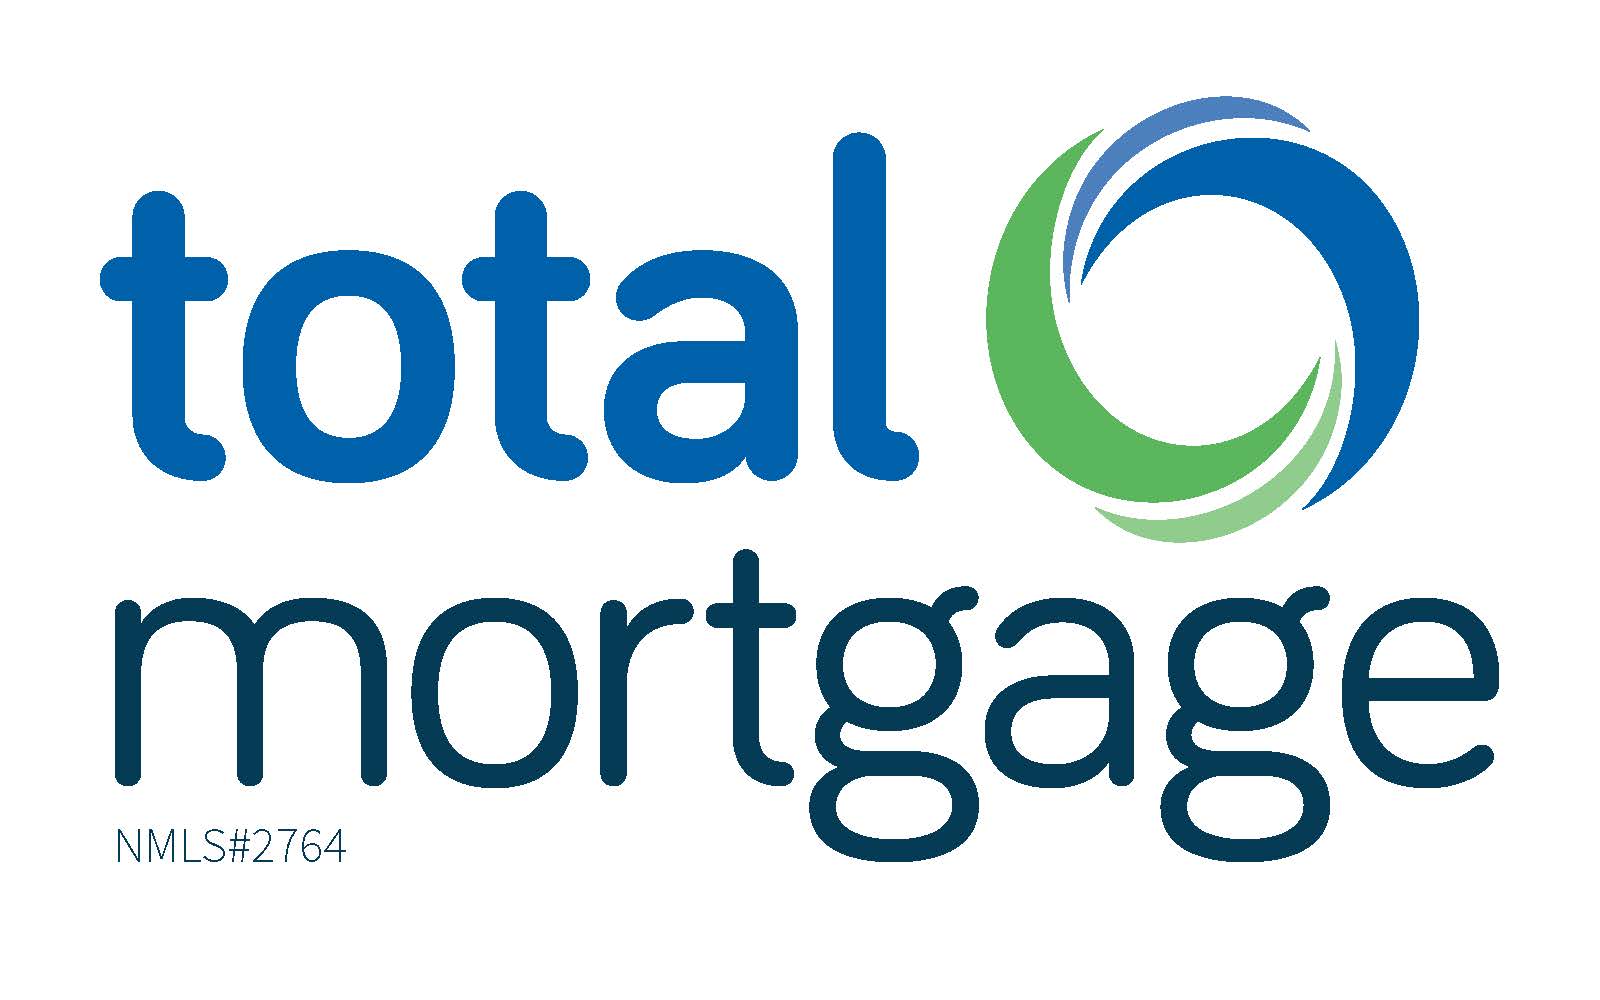 Total Mortgage - NCMAR Gold Sponsor